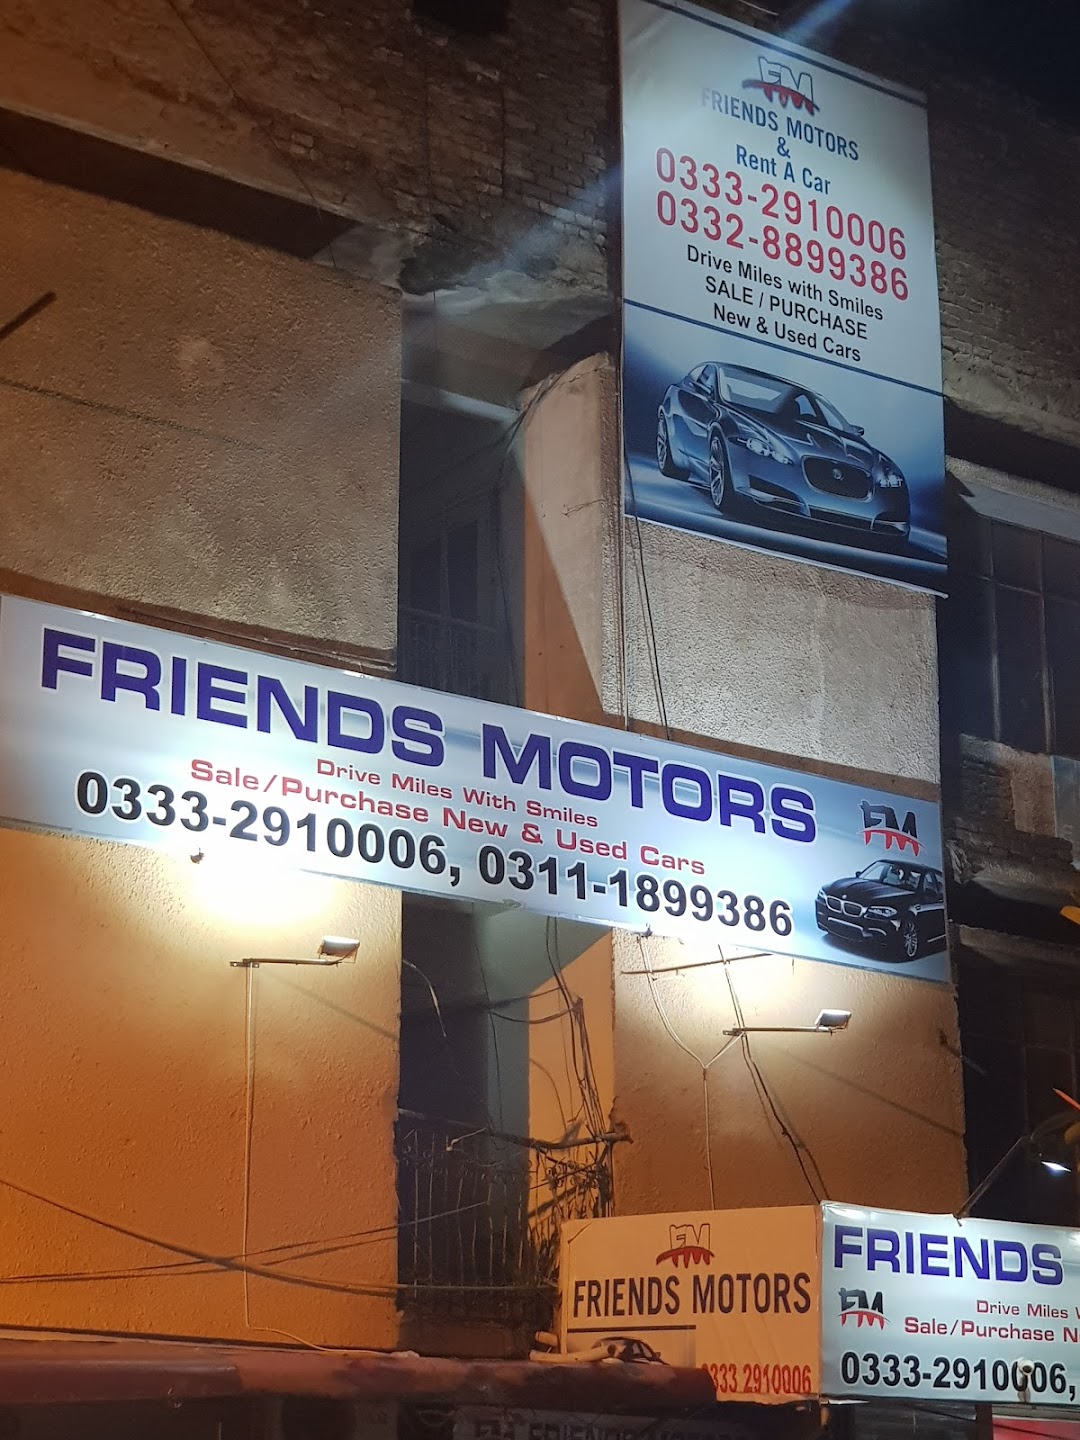 Friends Motors